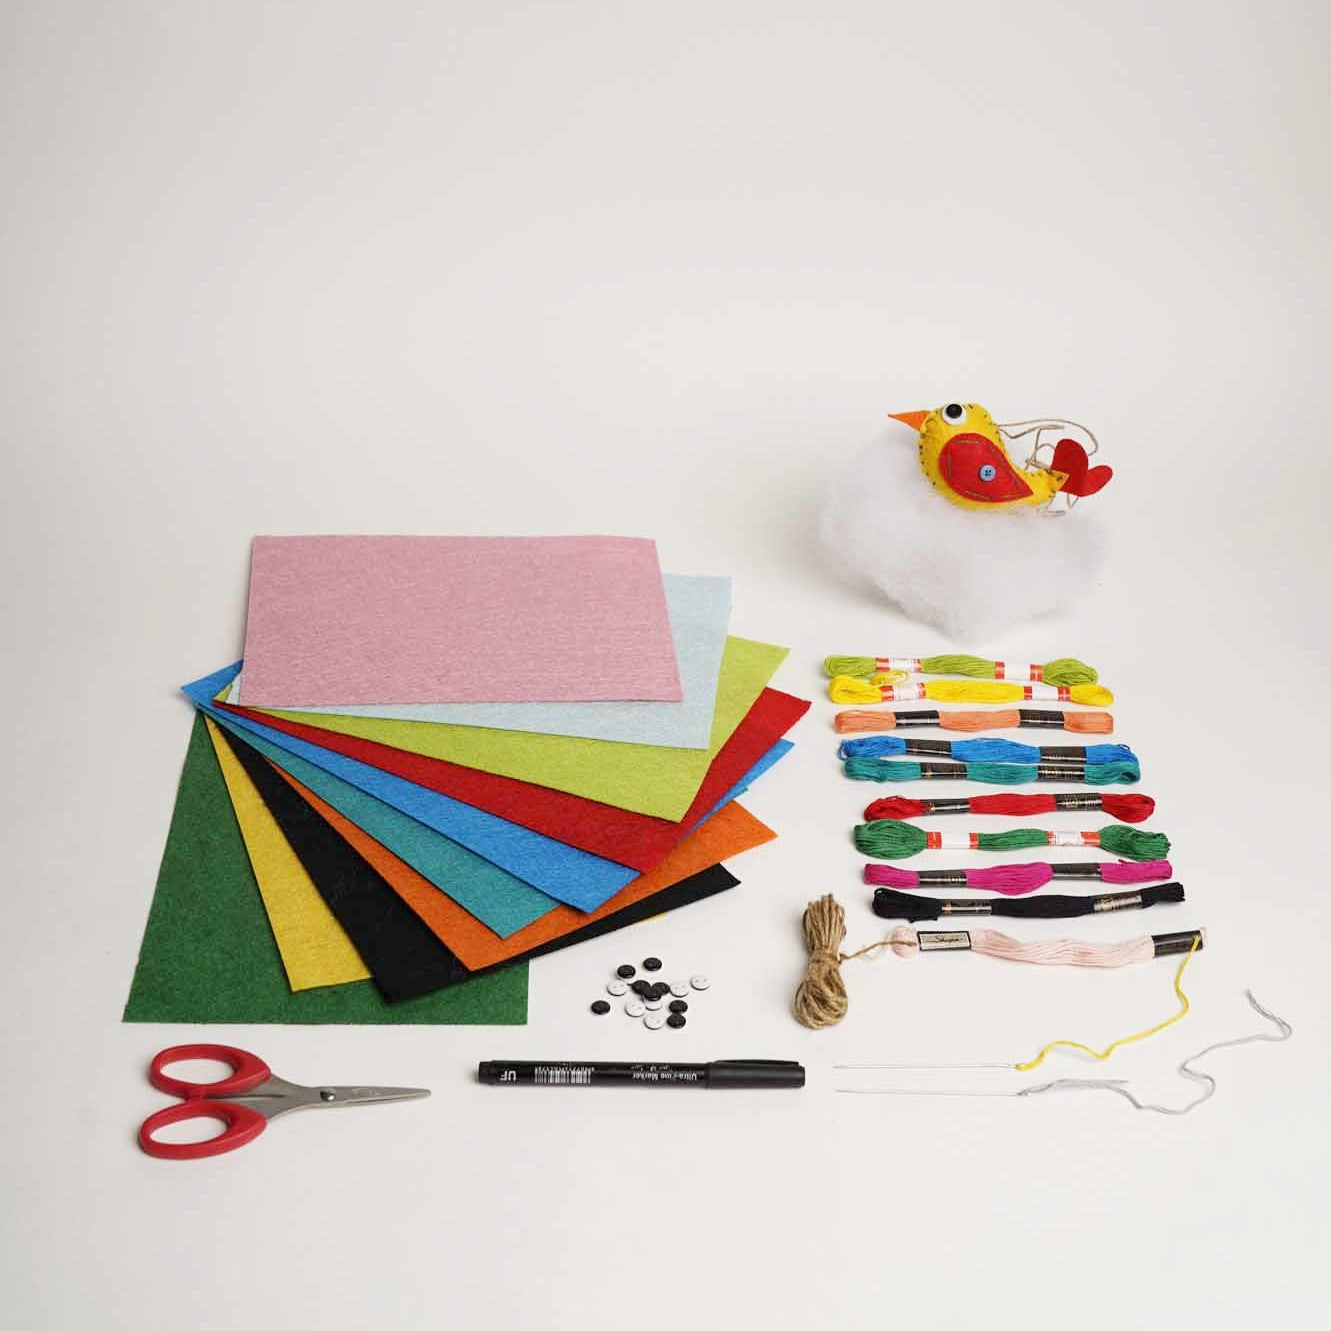 Felt Toys Art & Crafts - DIY Kit